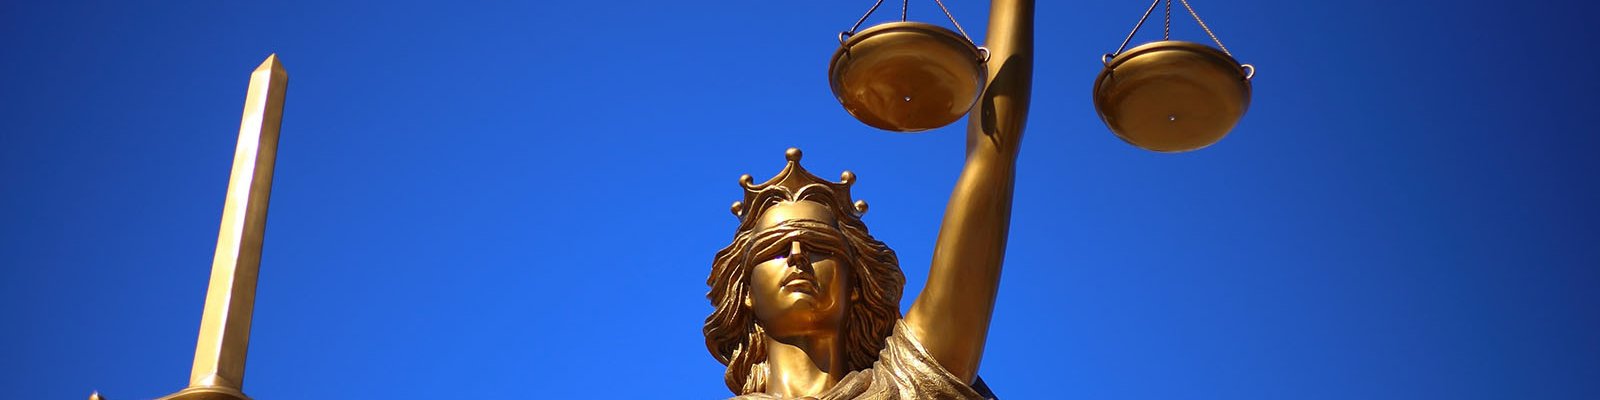 Justizia. Foto: Pixabay/William Cho justice-2060093.jpg